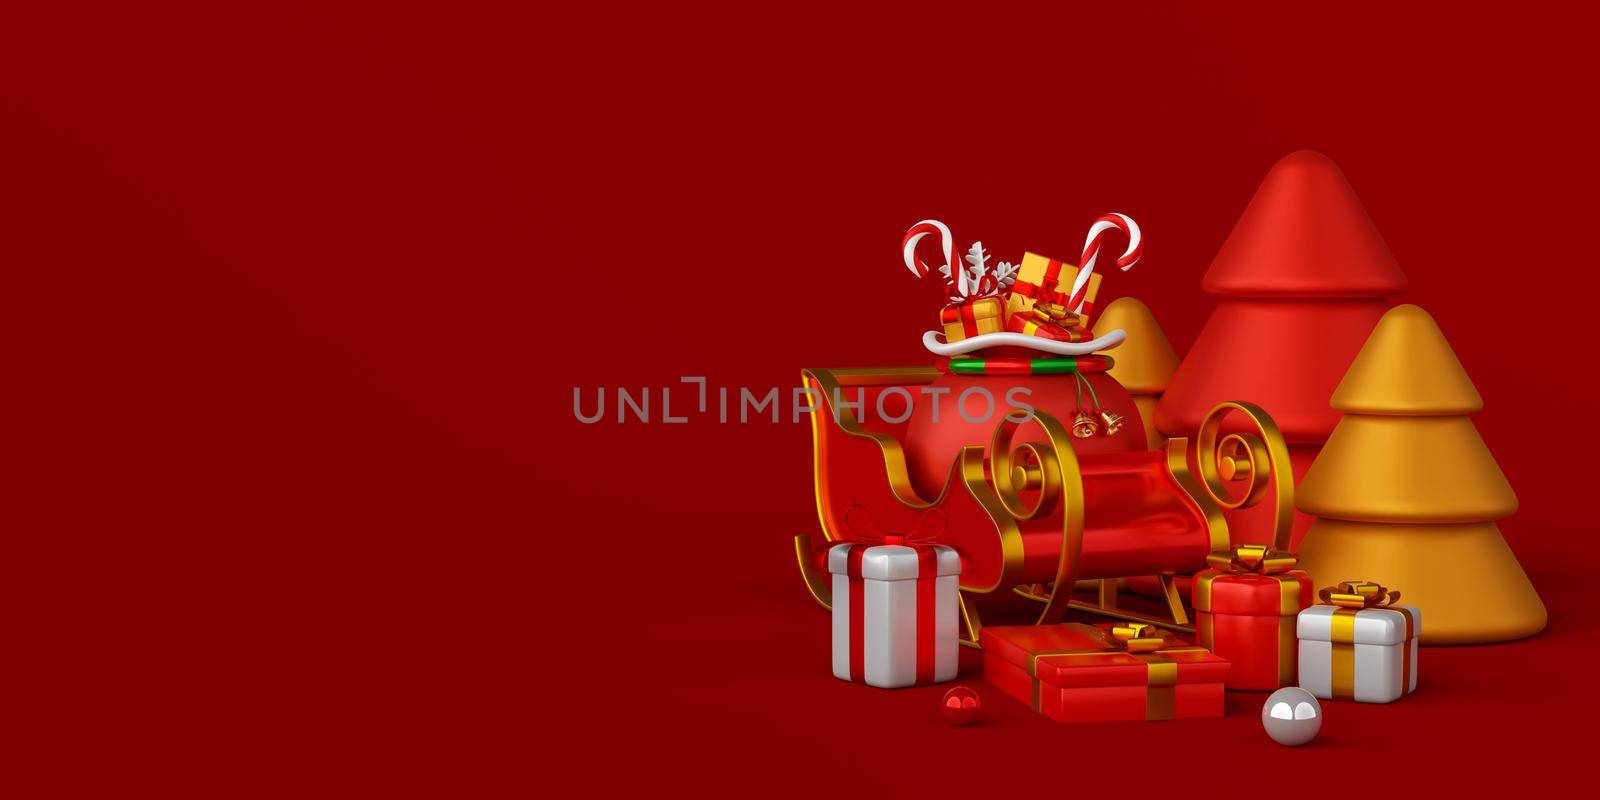 Christmas banner of sleigh with Christmas gift, 3d illustration